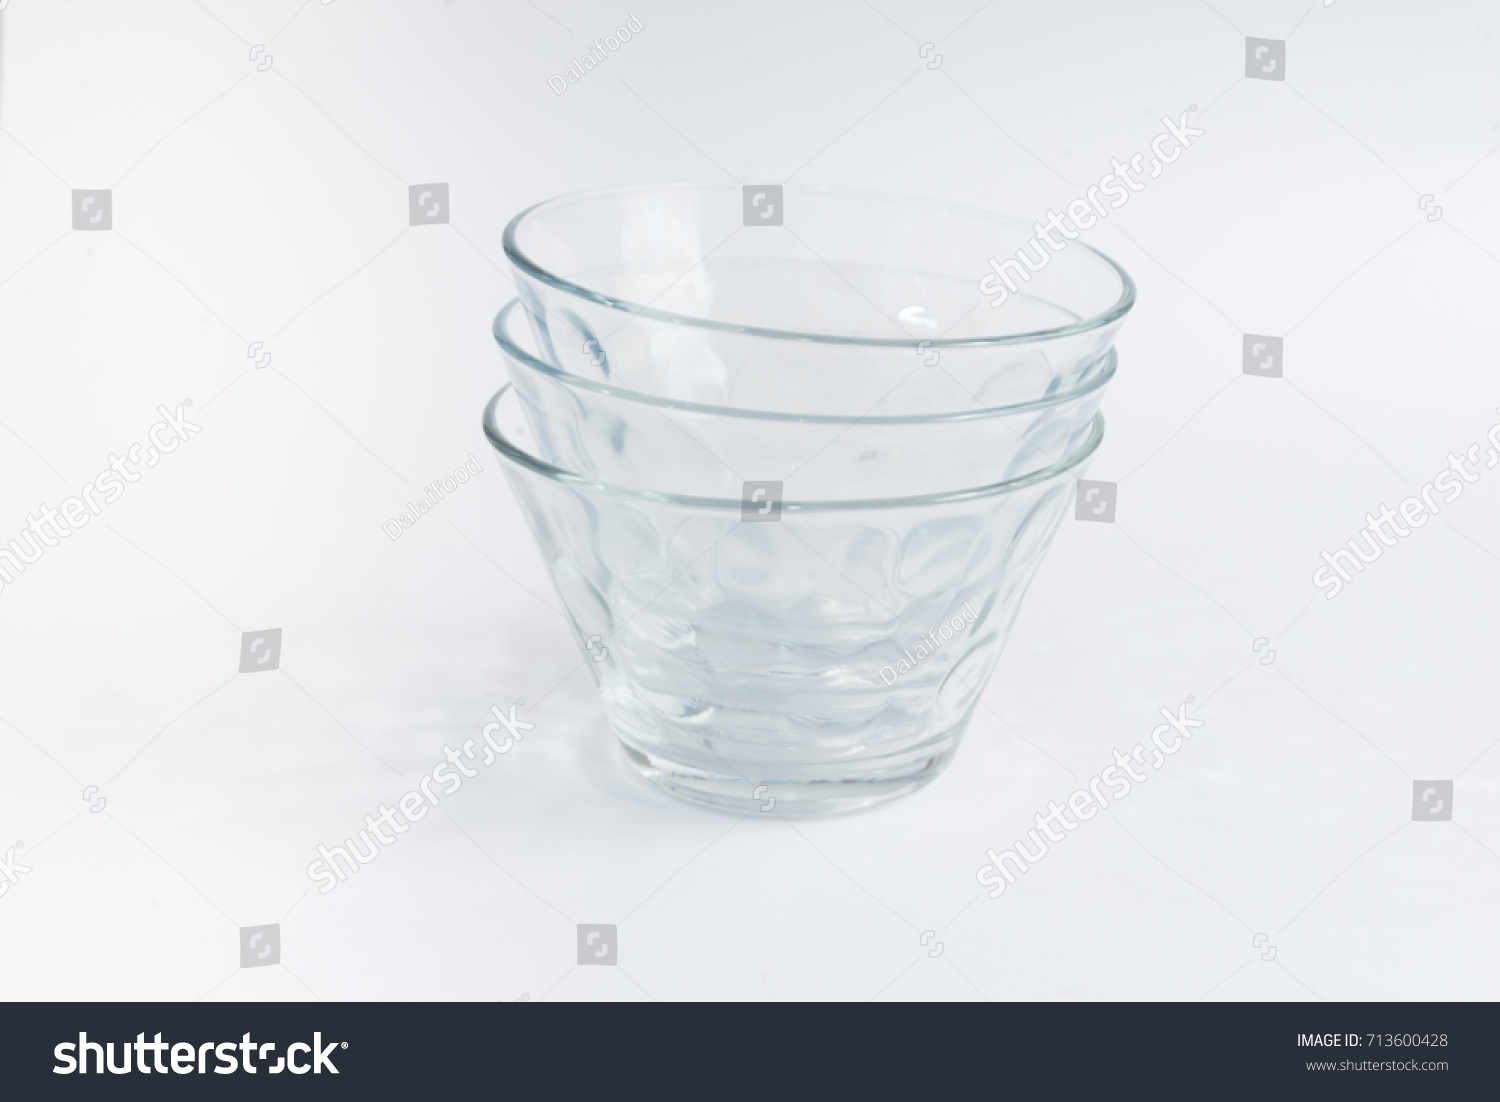 Bowl glass #713600428